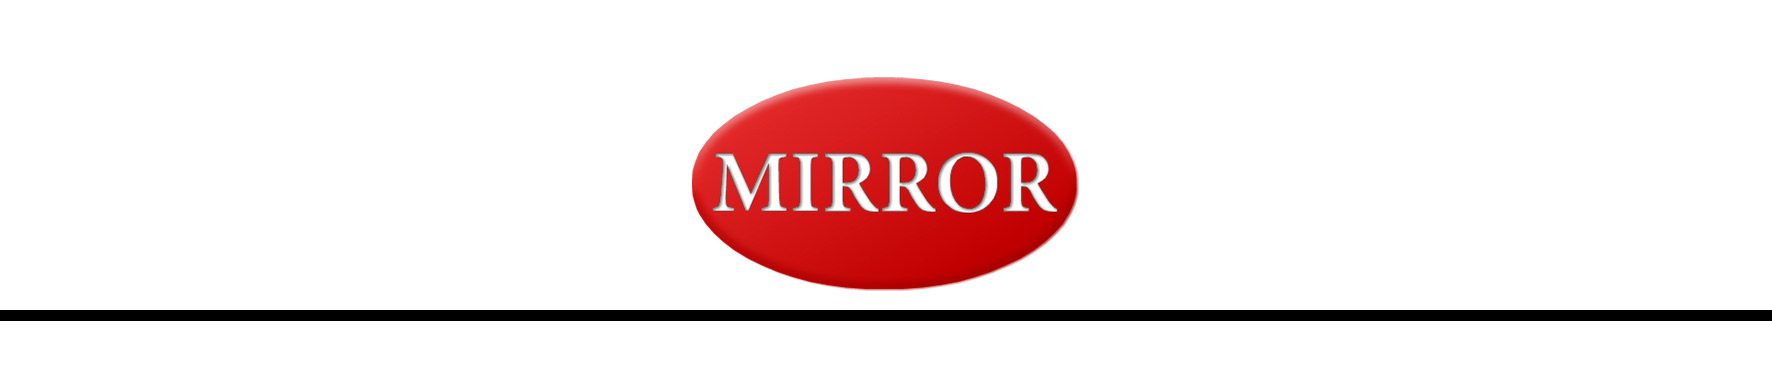 mirror linea